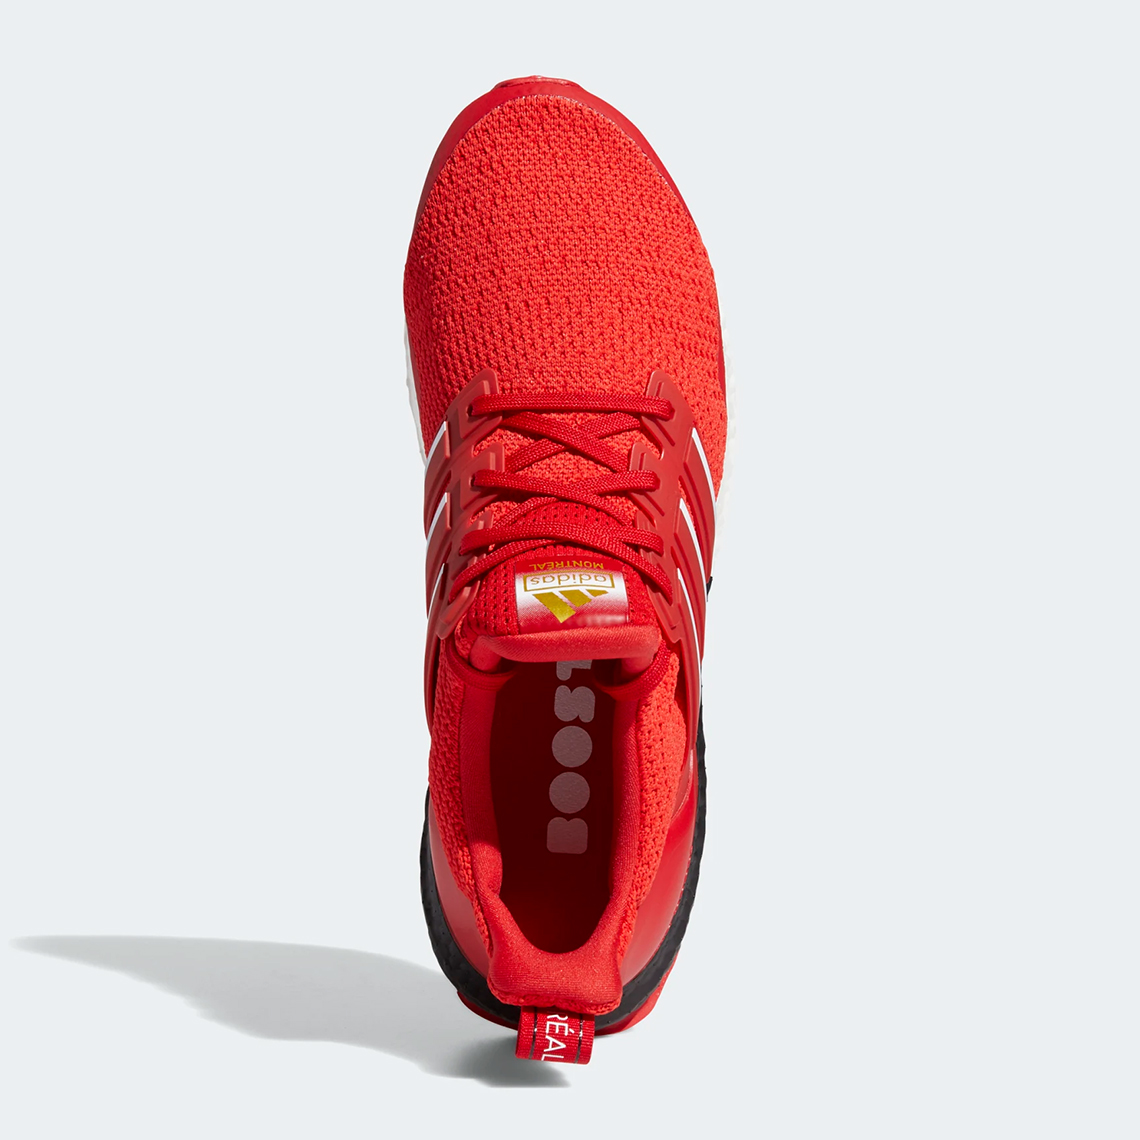 Adidas Ultra Boost Dna Scarlet Fy3426 1